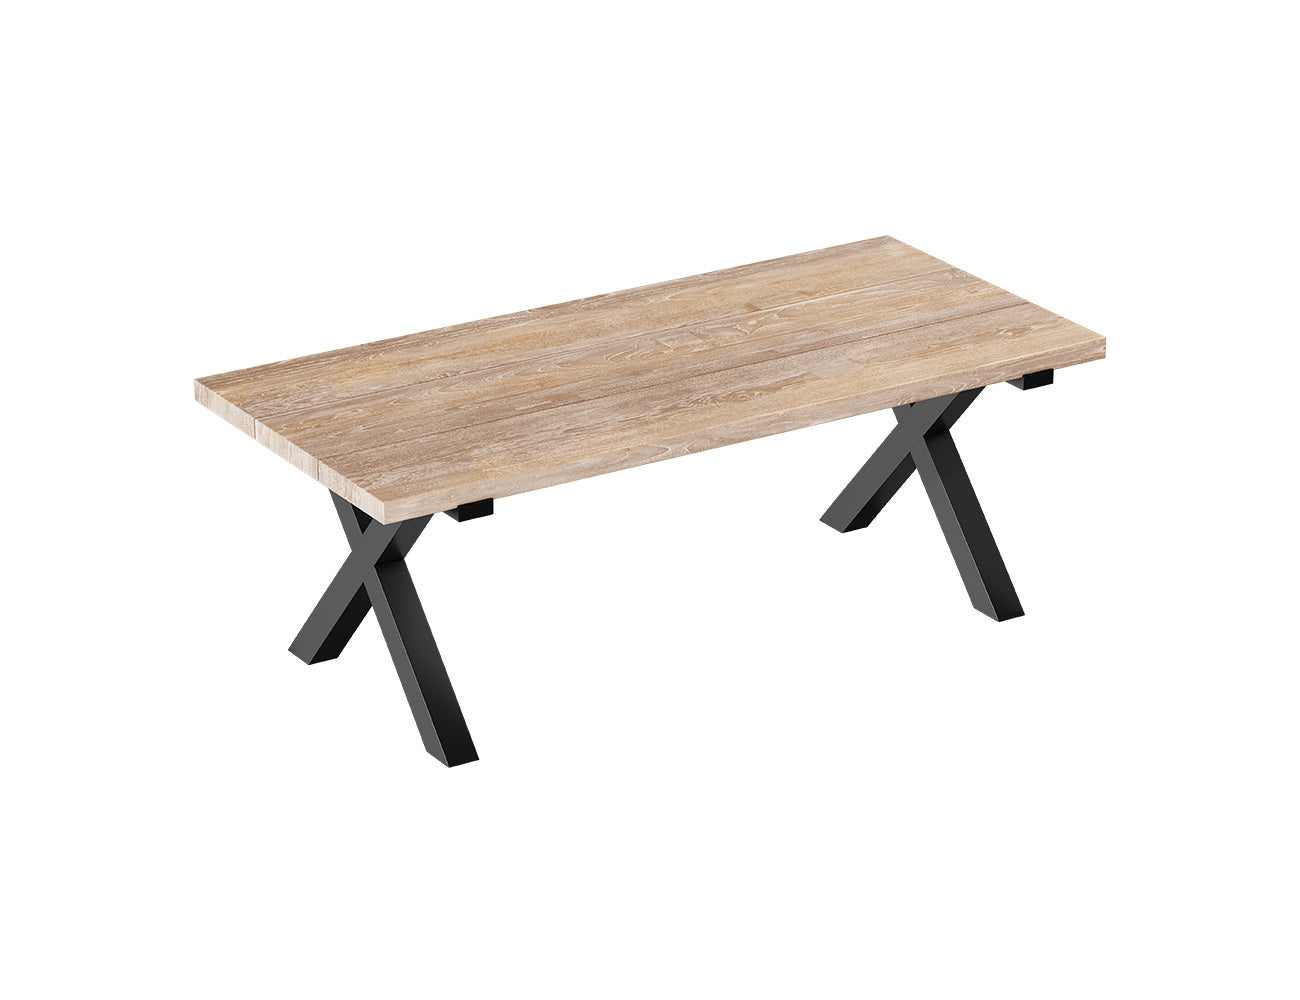 Fortico X-leg Teak Table 220cm